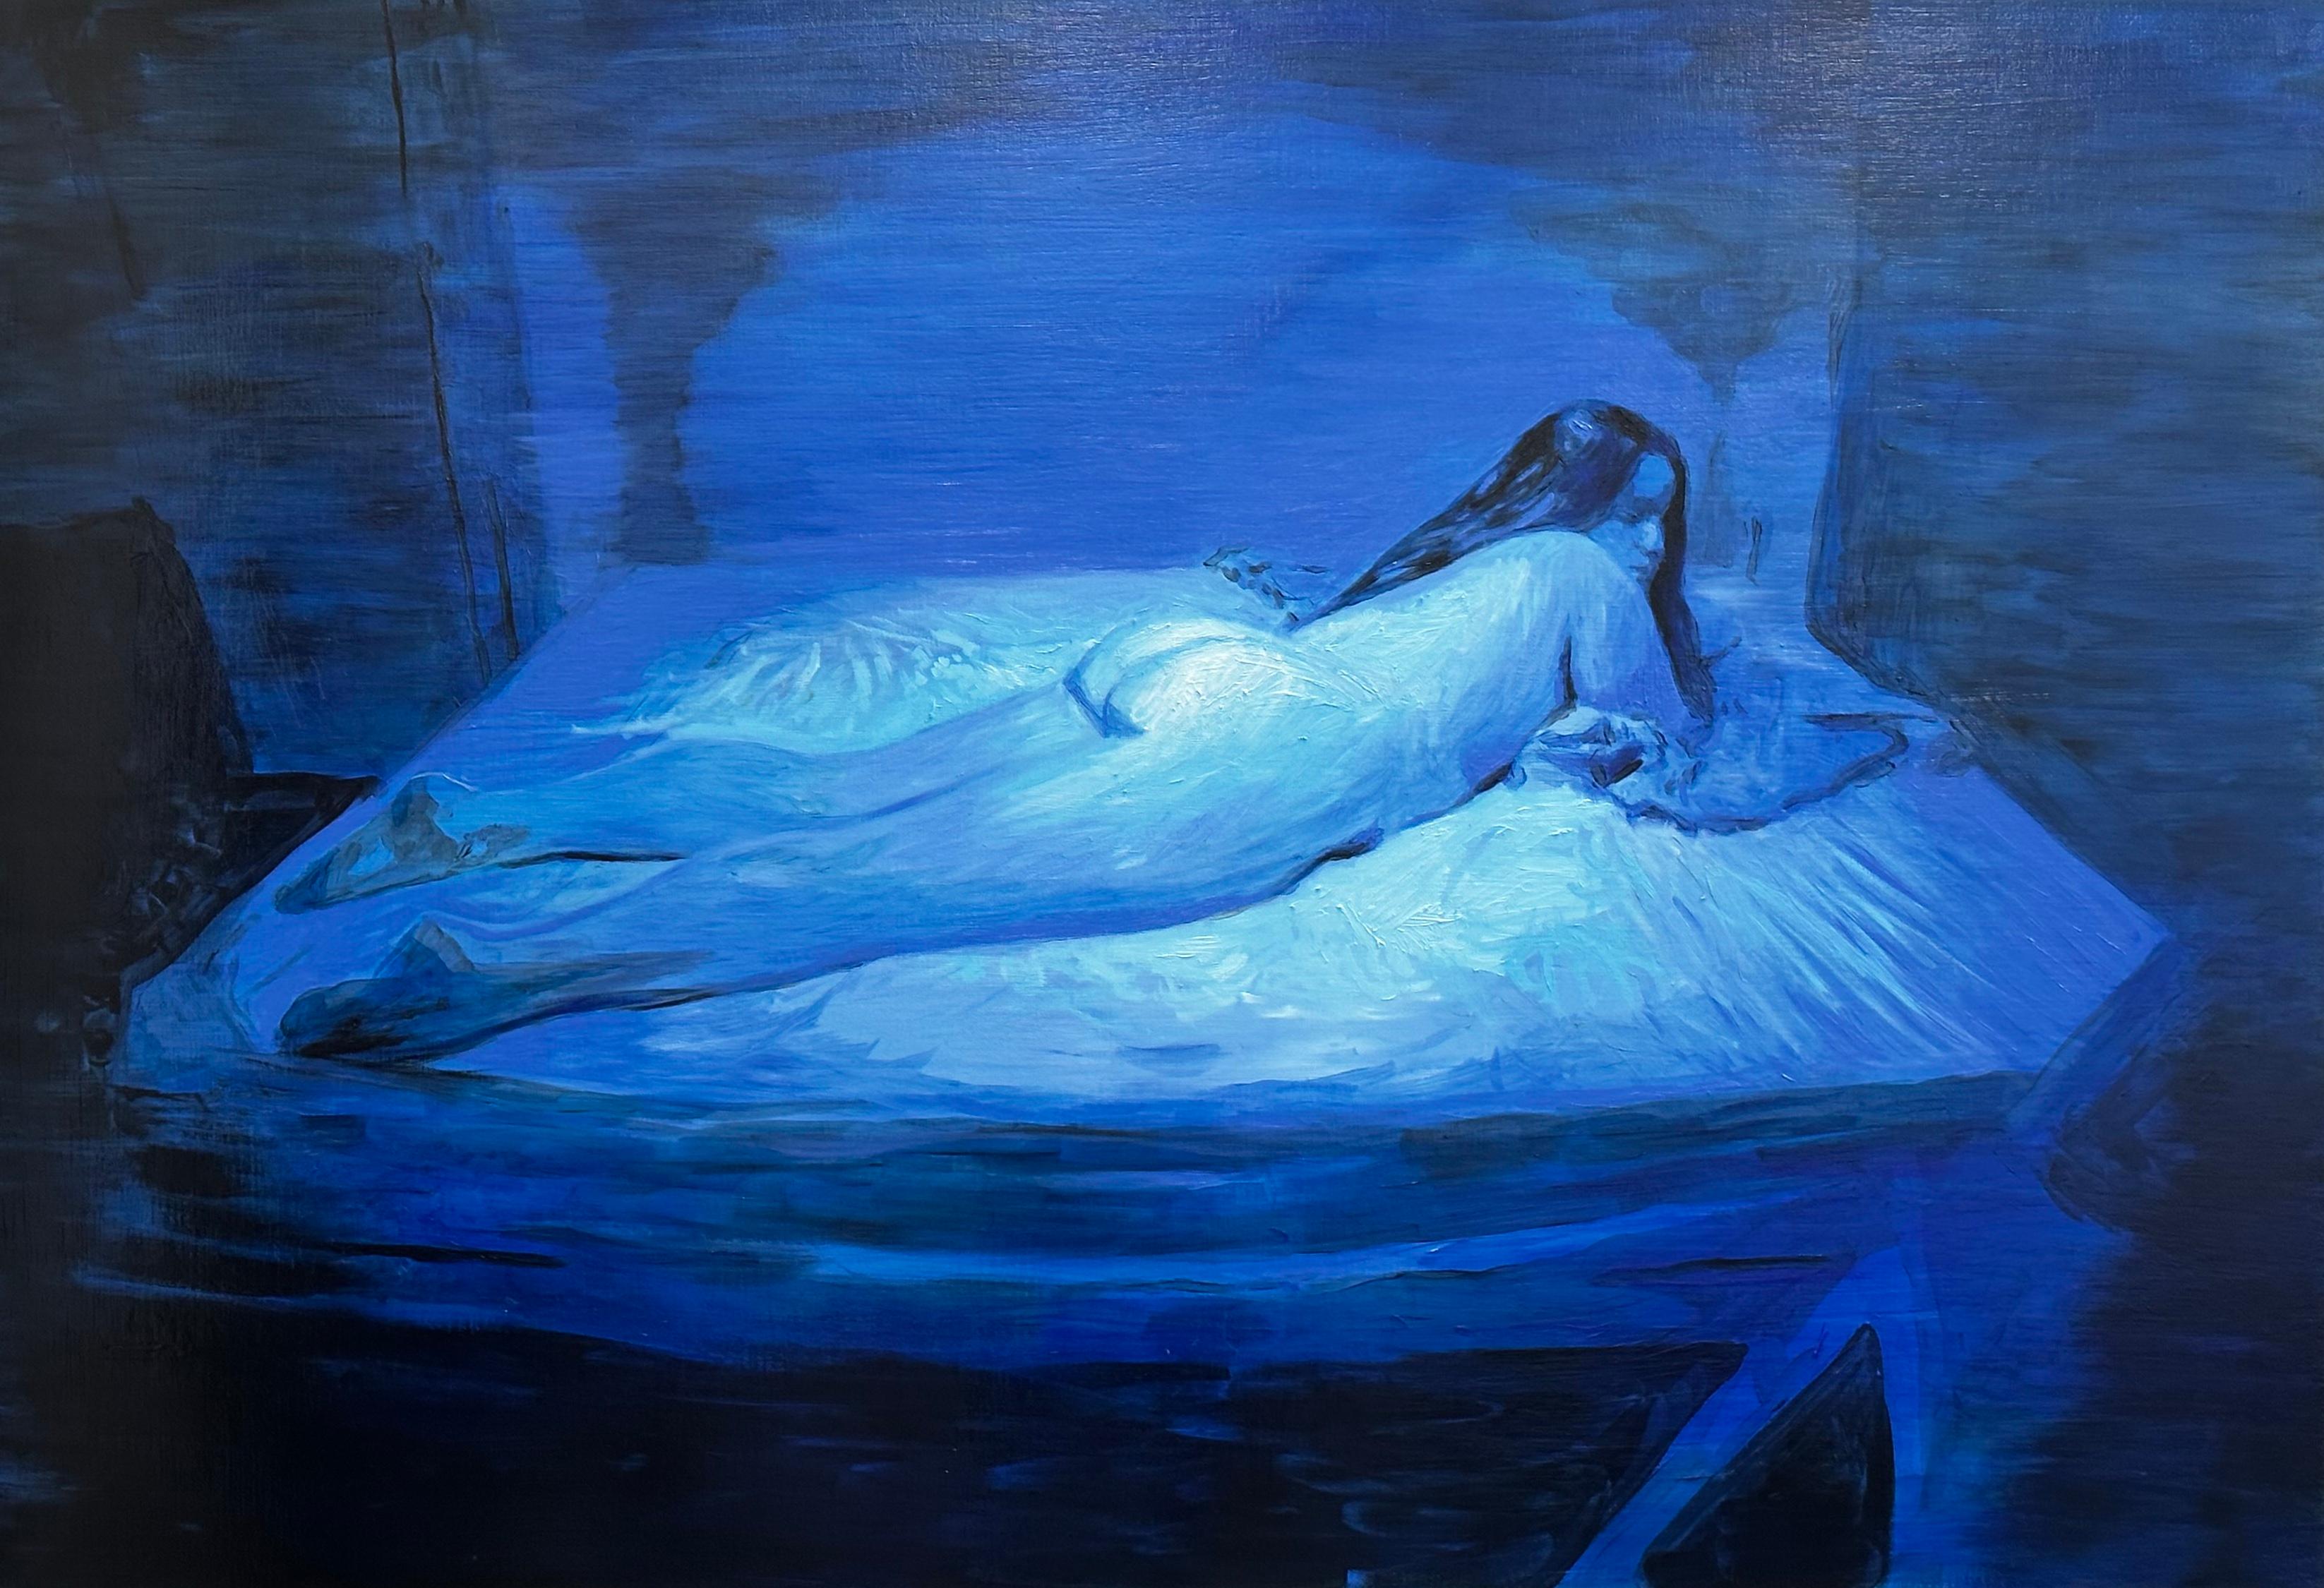 Nicolás Guzmán Nude Painting – Ohne Titel - Frau, Aktporträt, figuratives Ölgemälde, blau und schwarz